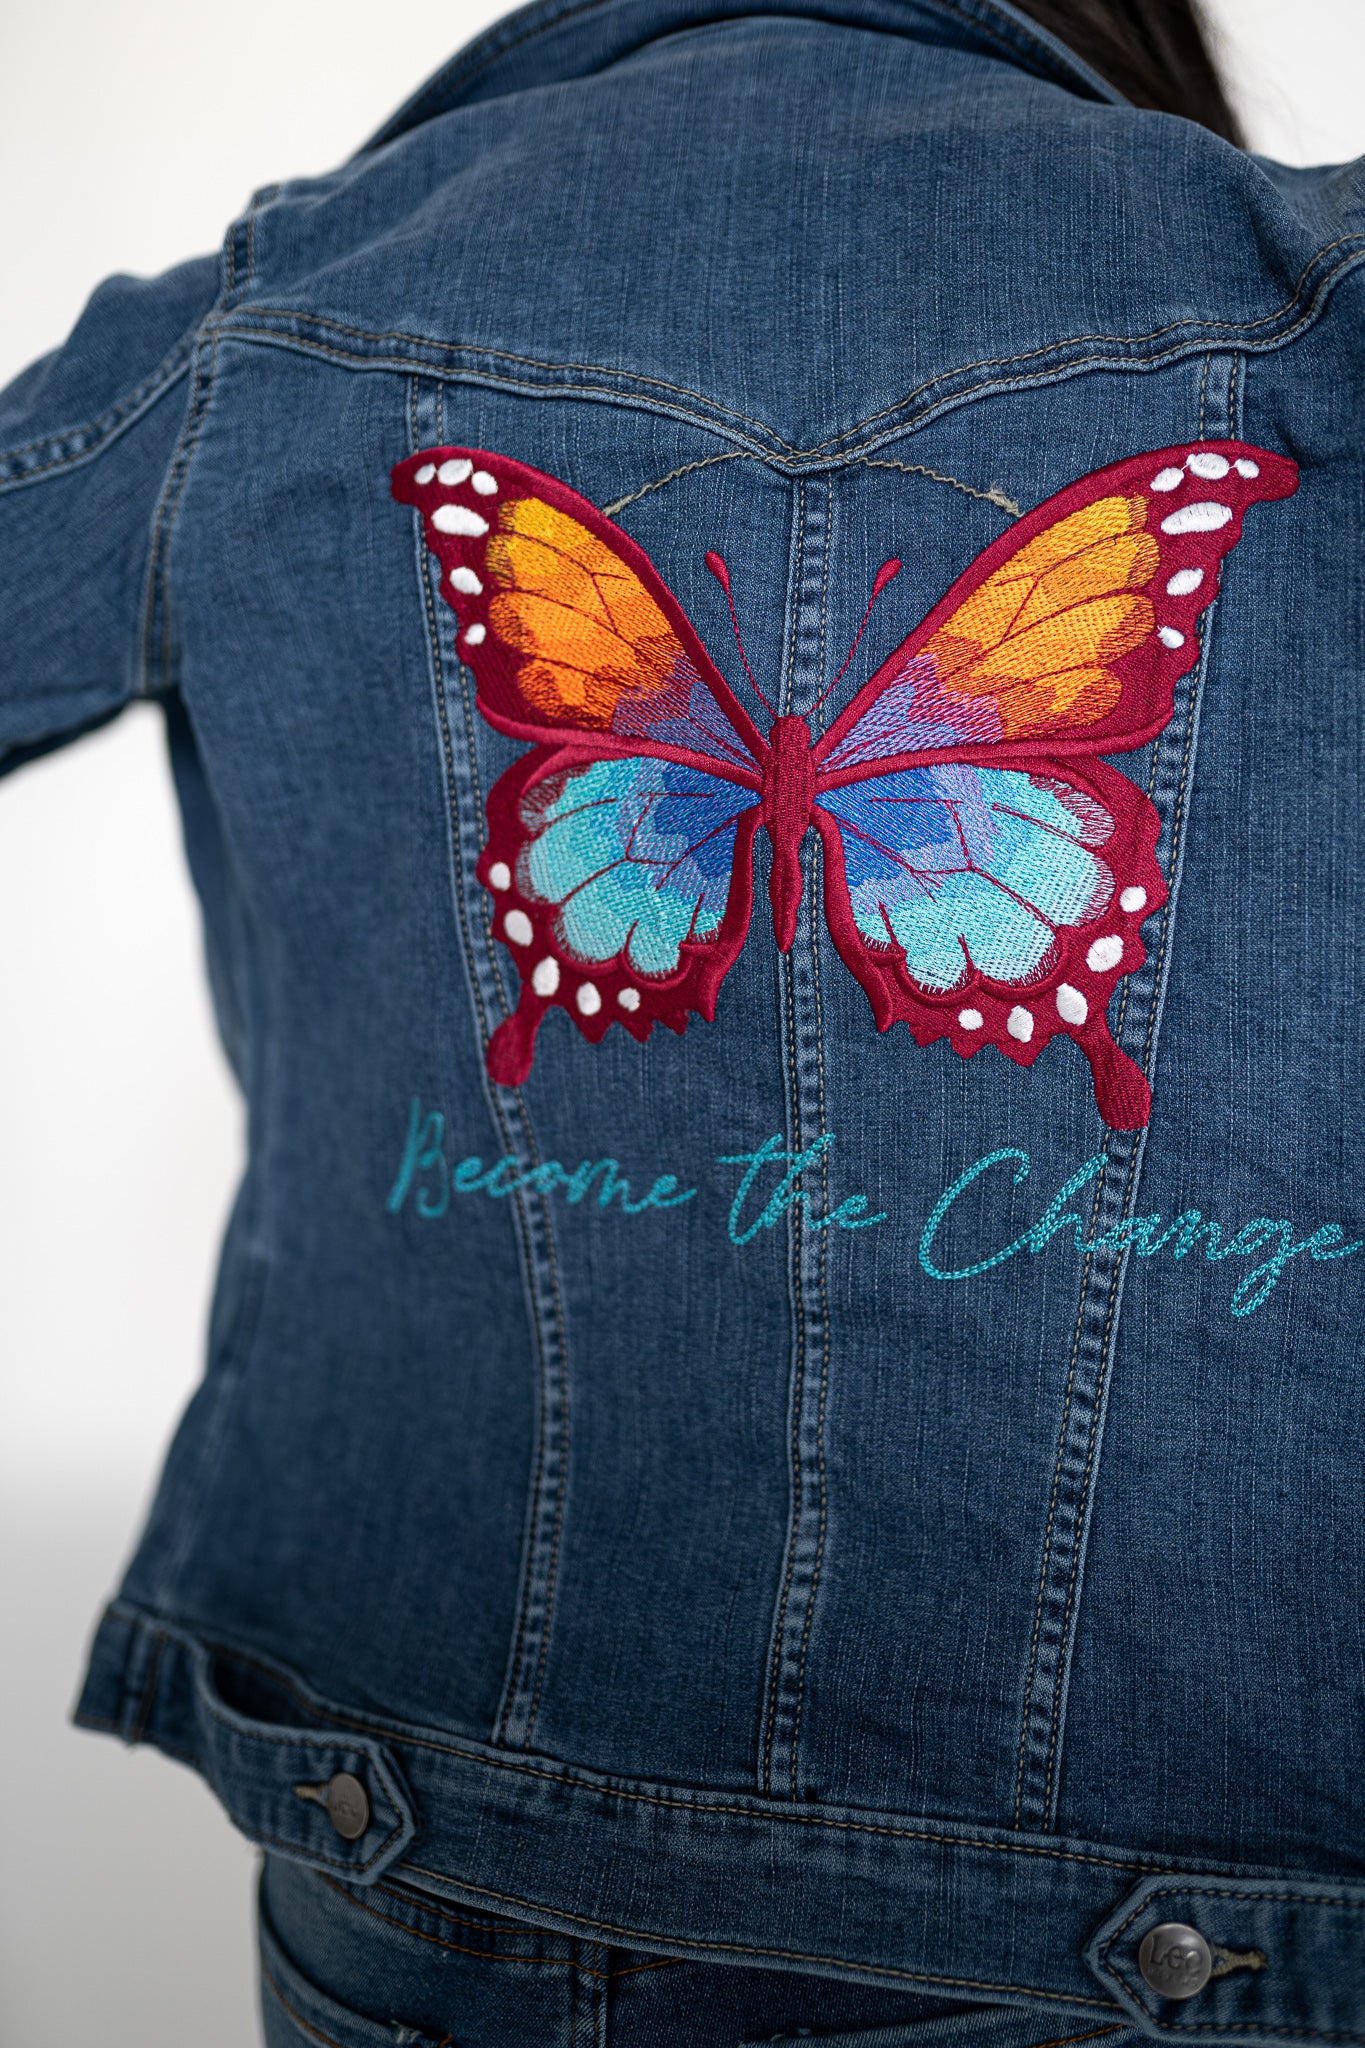 Become The Change Ladies' Denim Jacket